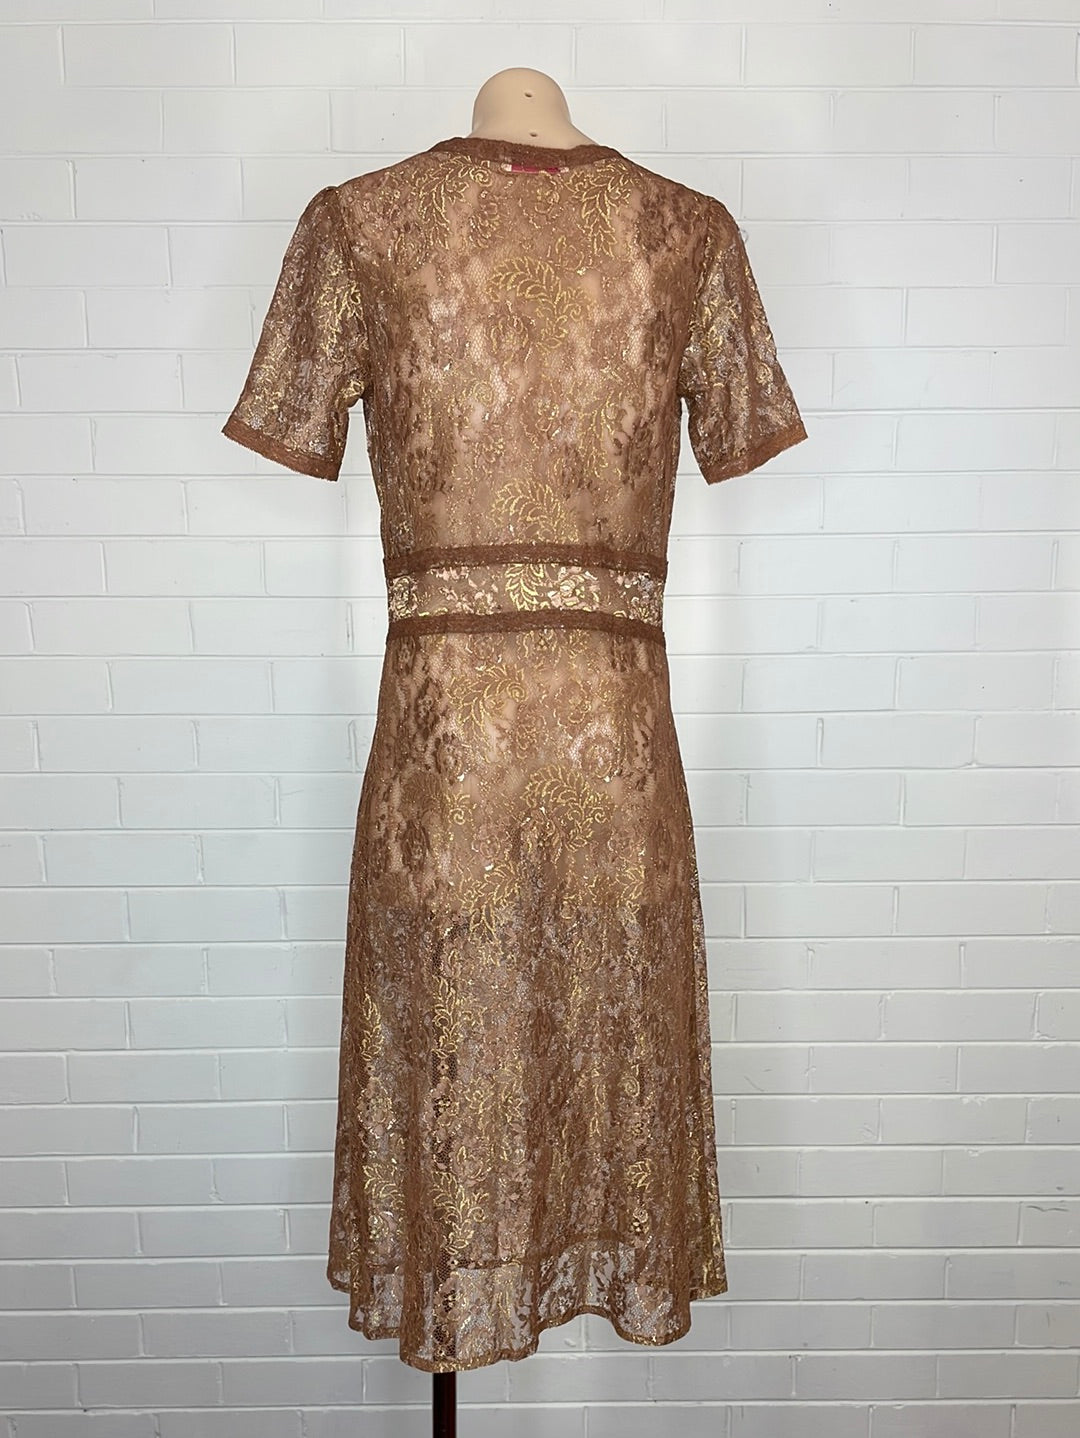 Alannah Hill | dress | size 10 | midi length